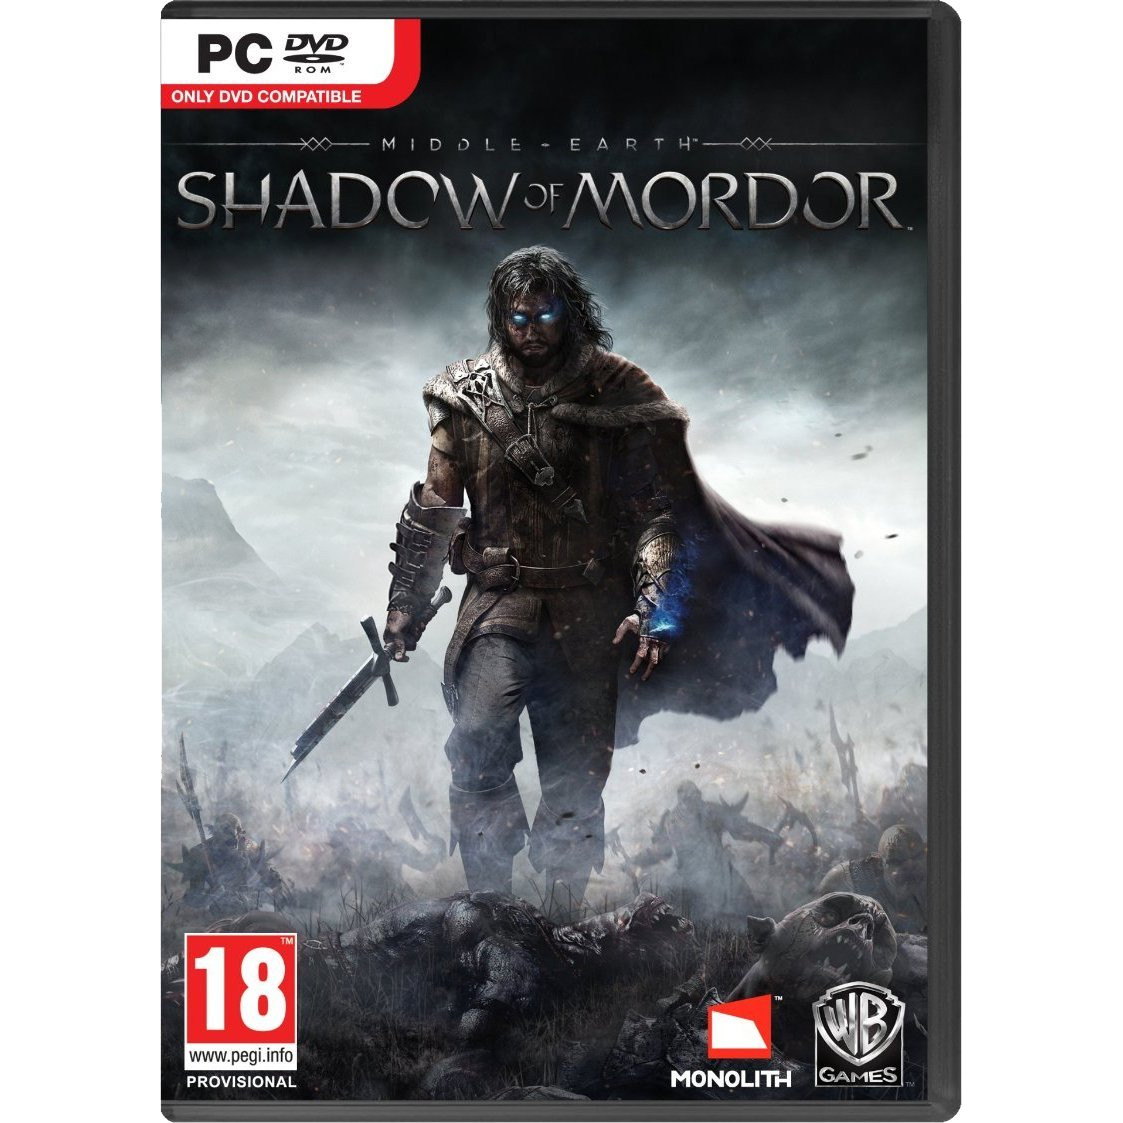  Joc PC Middle Earth Shadow of Mordor 